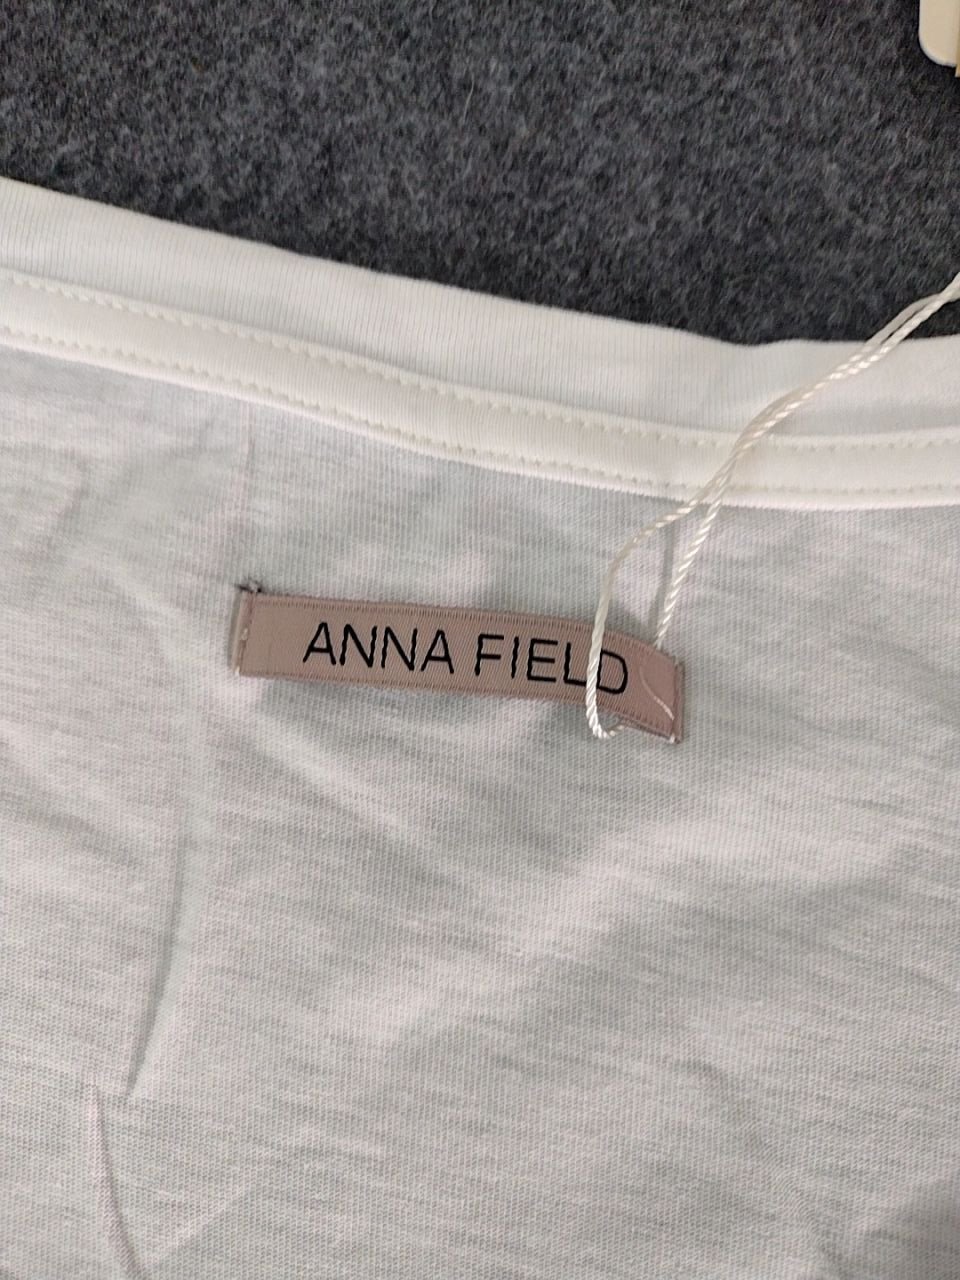 Dámské tričko Anna Field vel. M